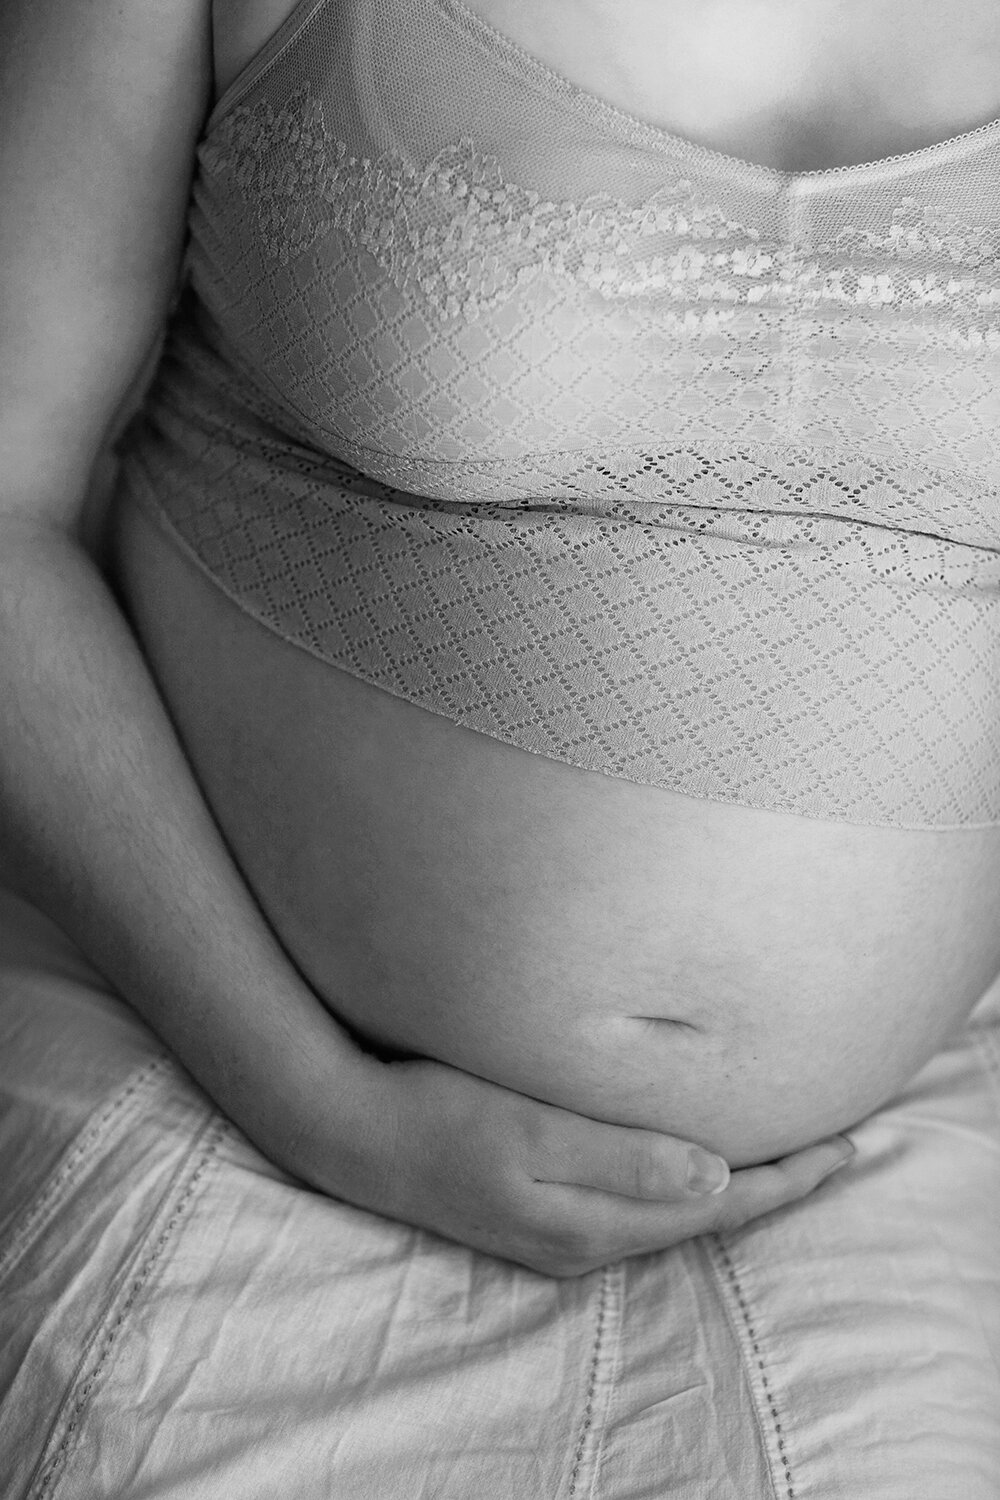 pregnancy photographer.jpg